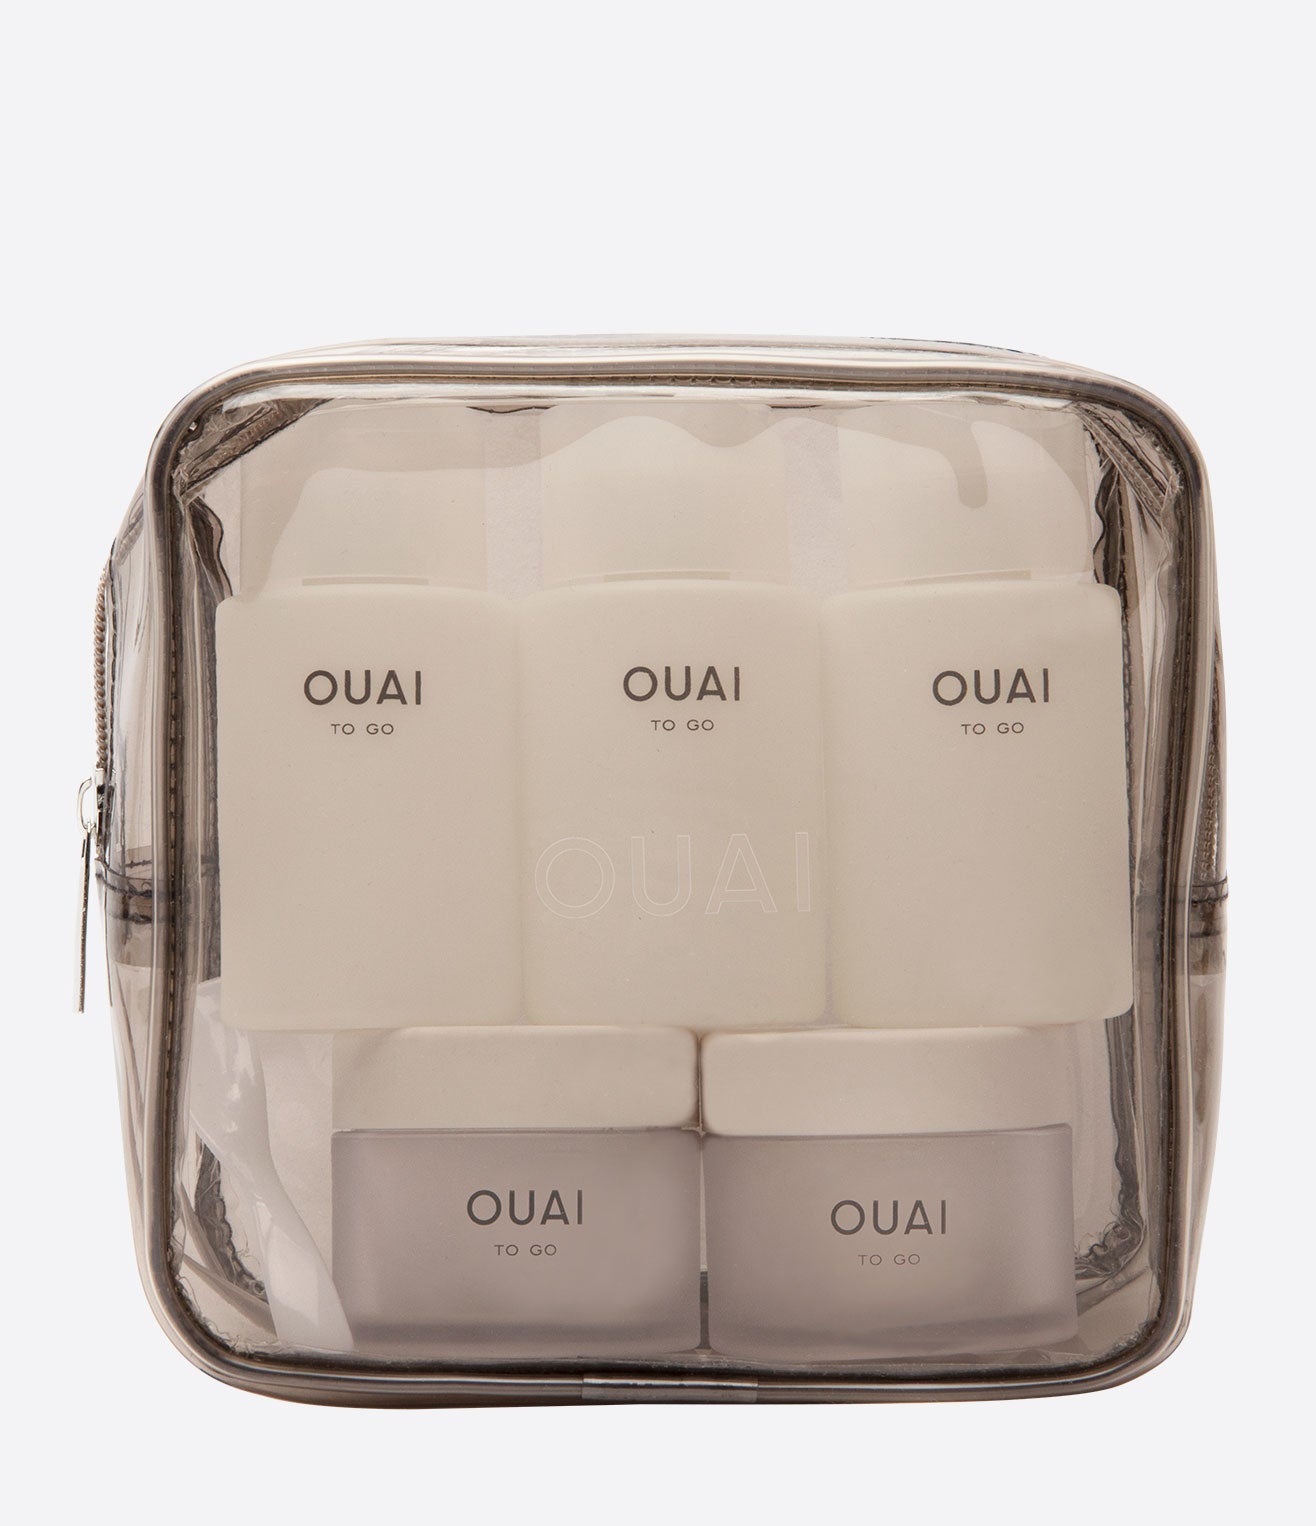 OUAI To Go Refillable Travel Bottle Kit